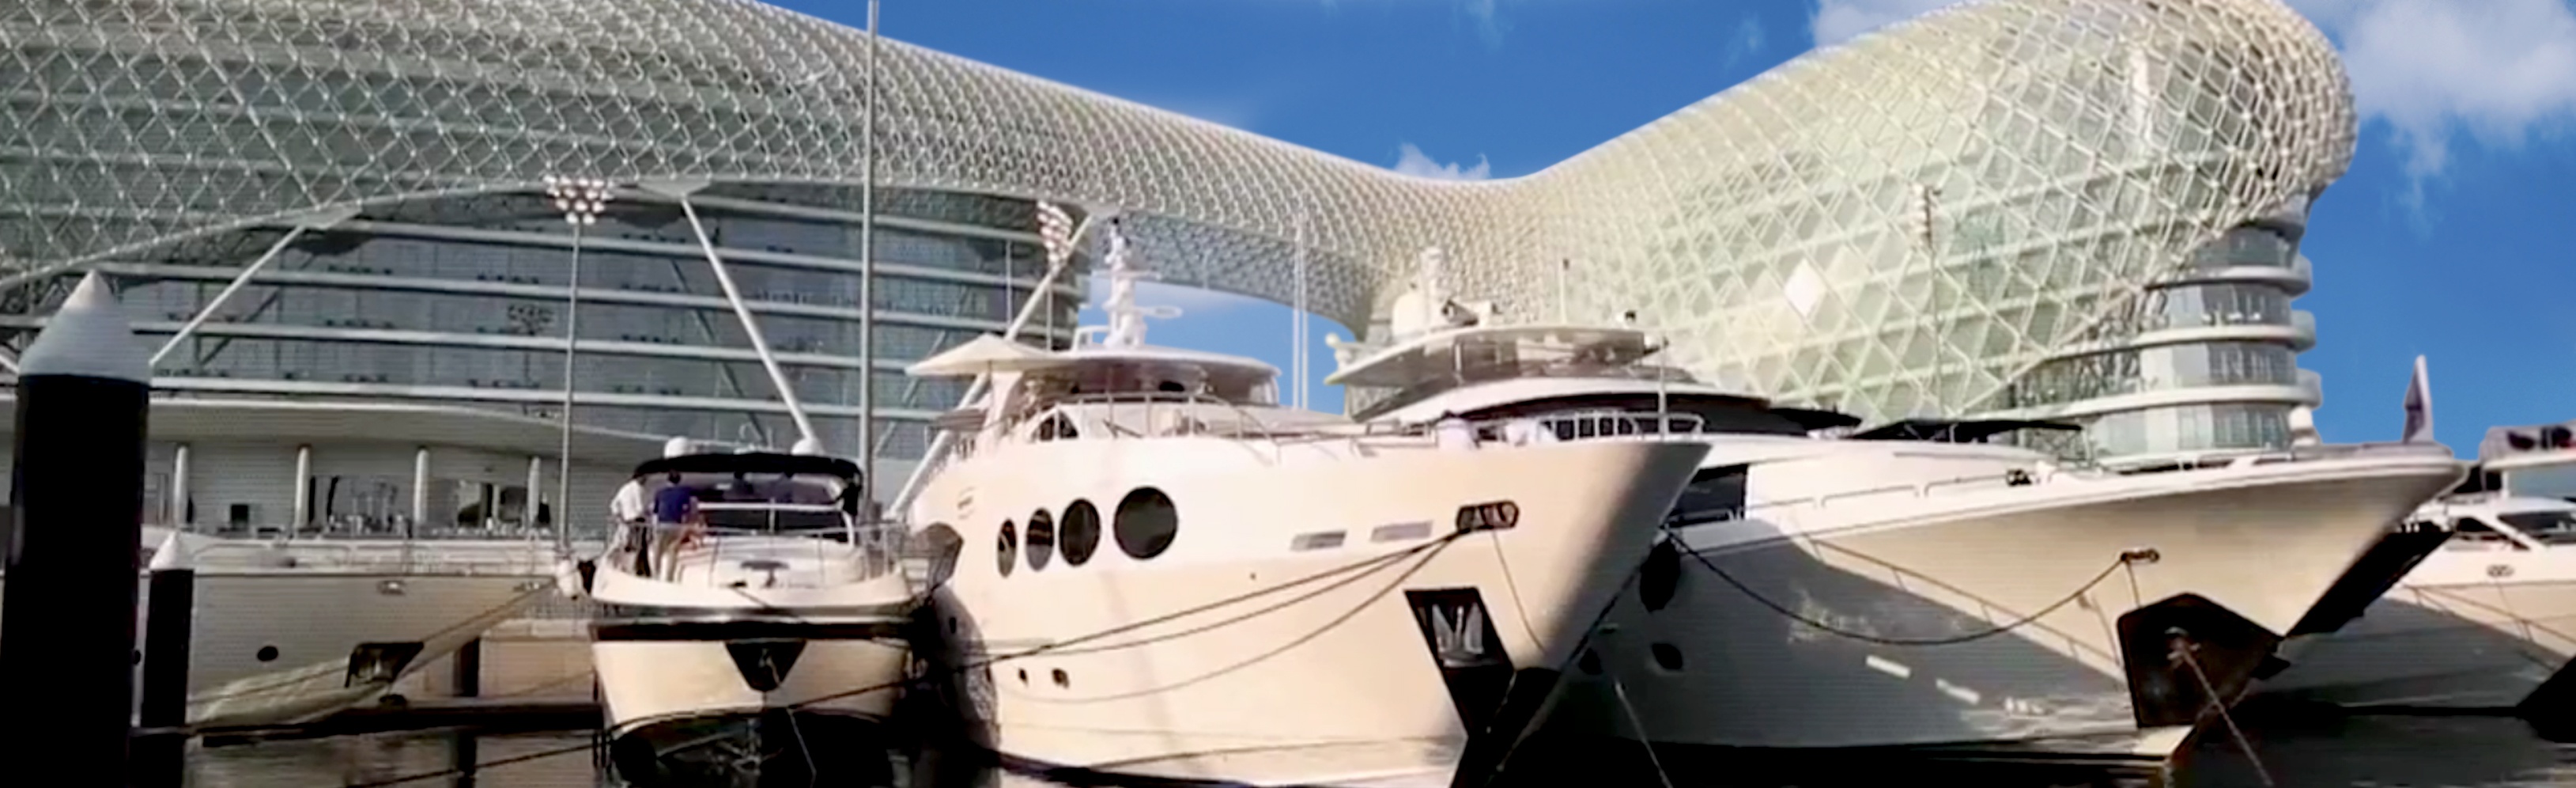 Gulf-Craft---Majesty-Yachts-in-YAS-Marine-Abu-Dhabi-(4).jpg